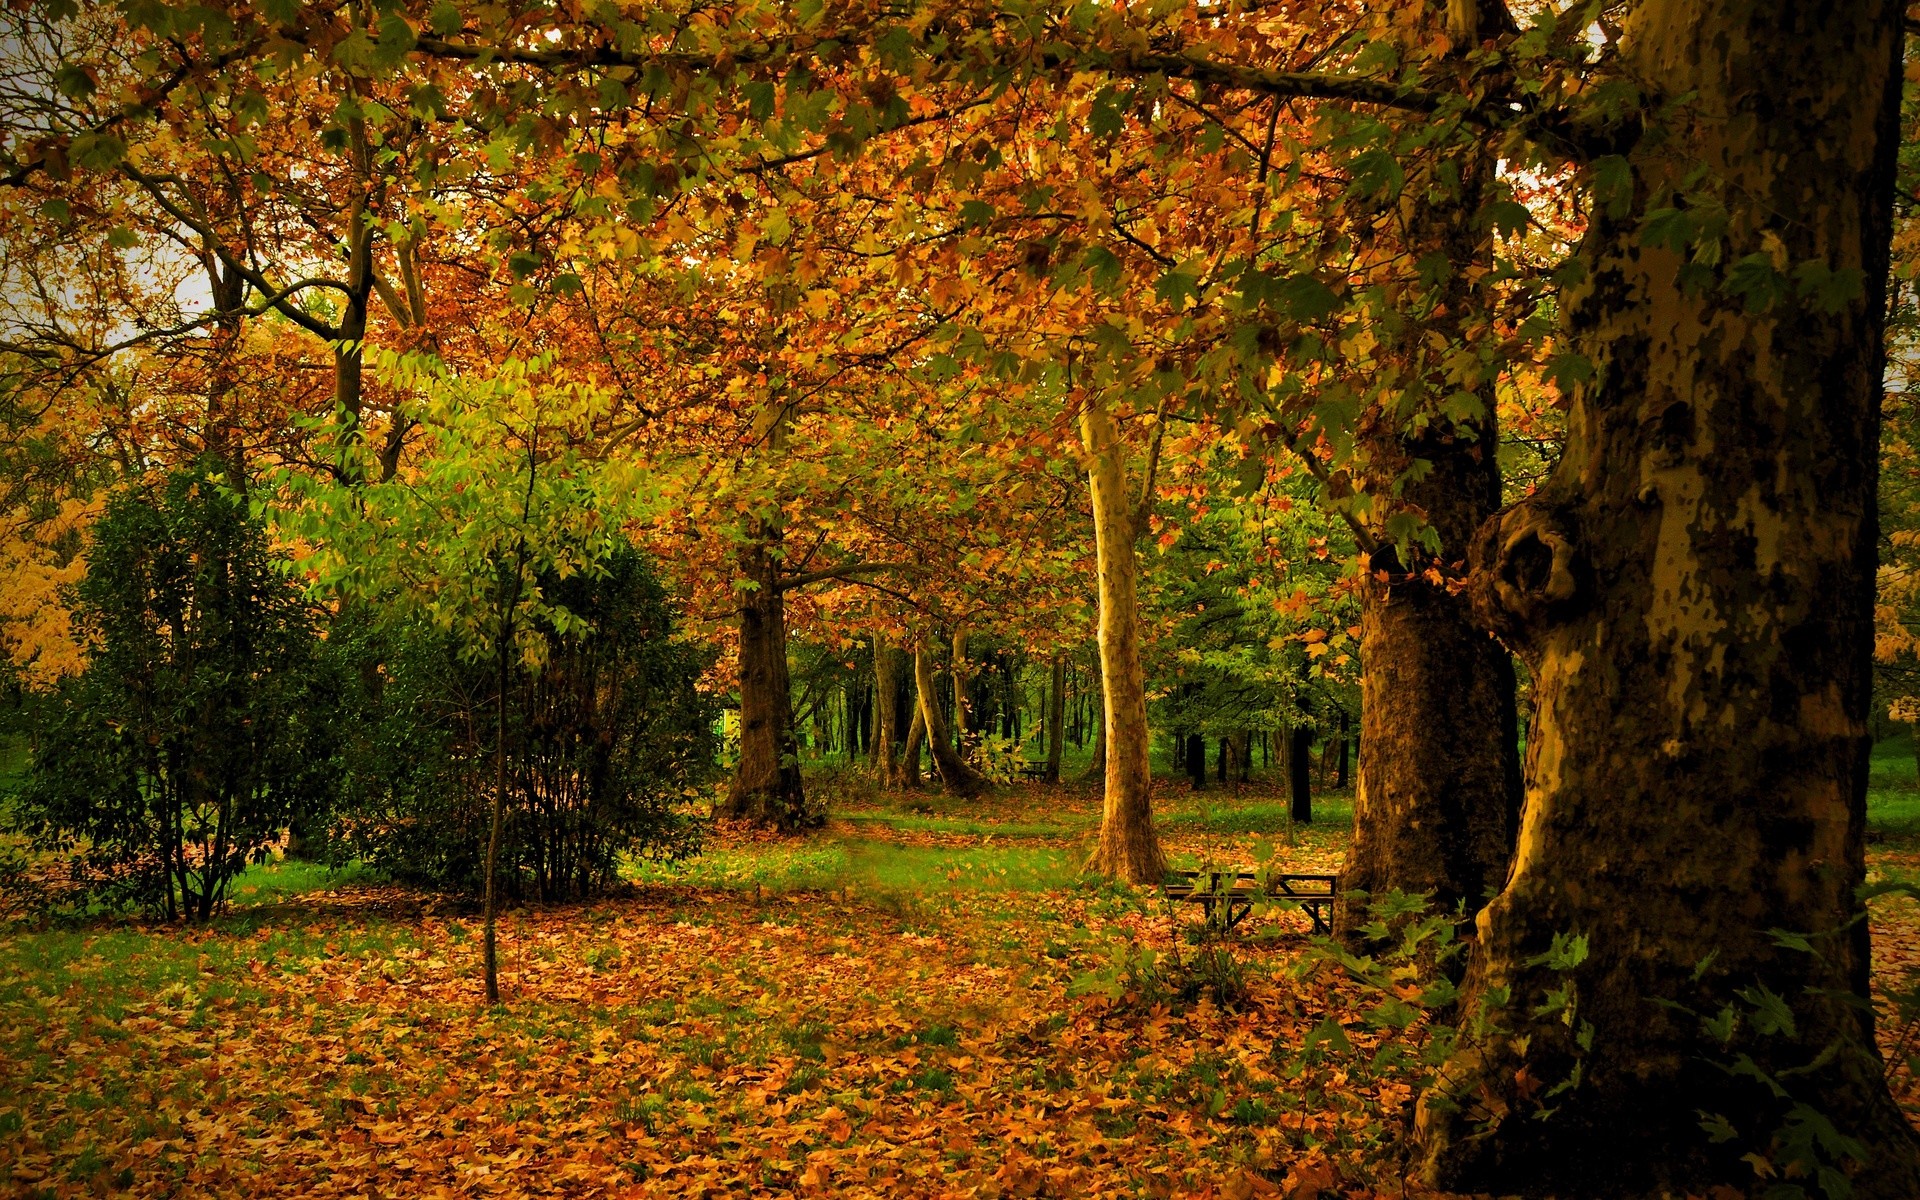 autumn background images